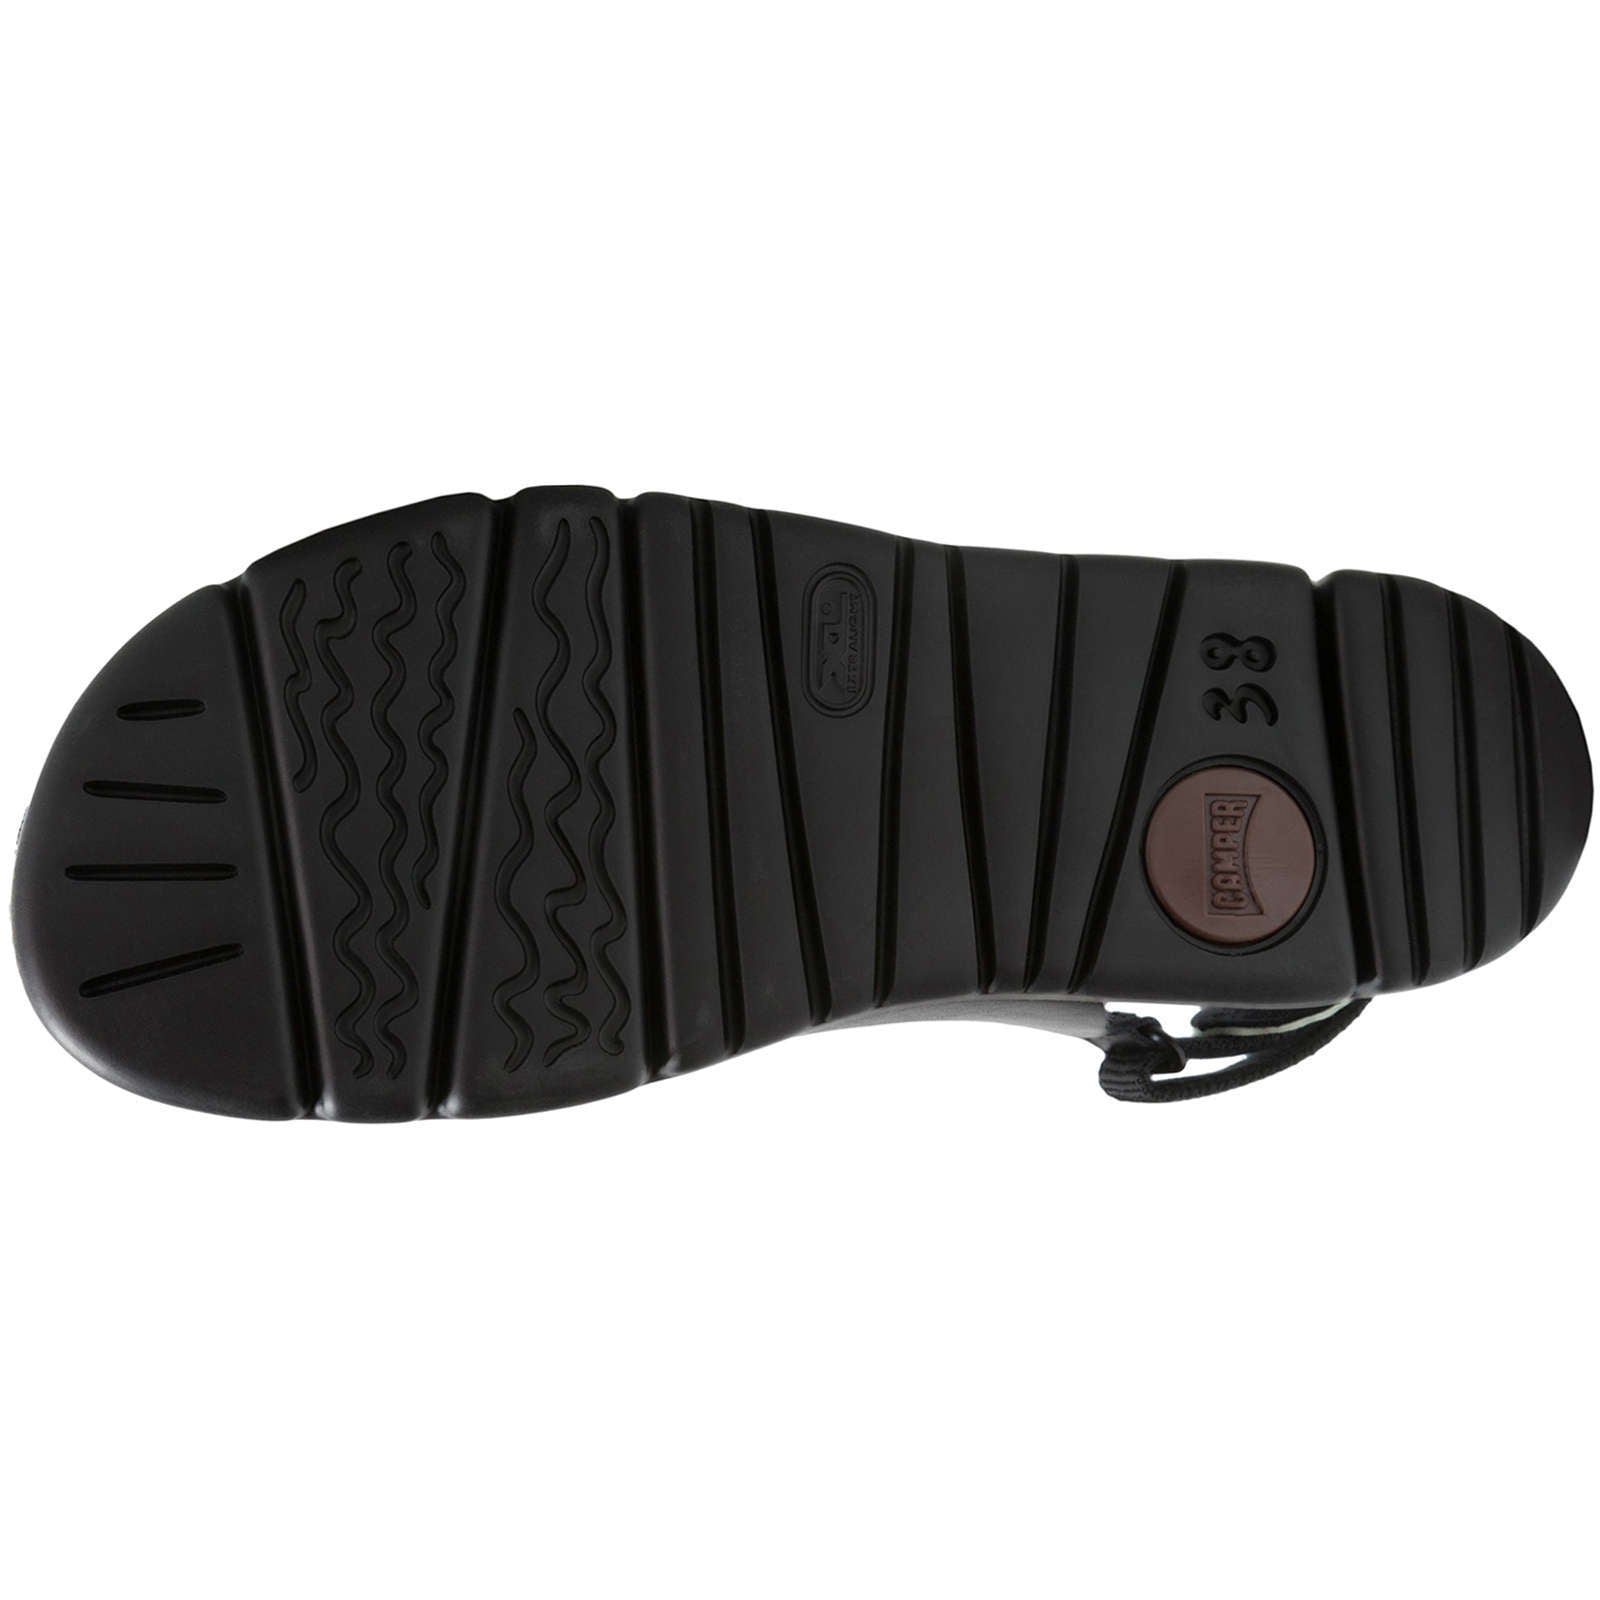 Camper Oruga Calfskin Leather & Textile Women's Open-Toe Sandals#color_black